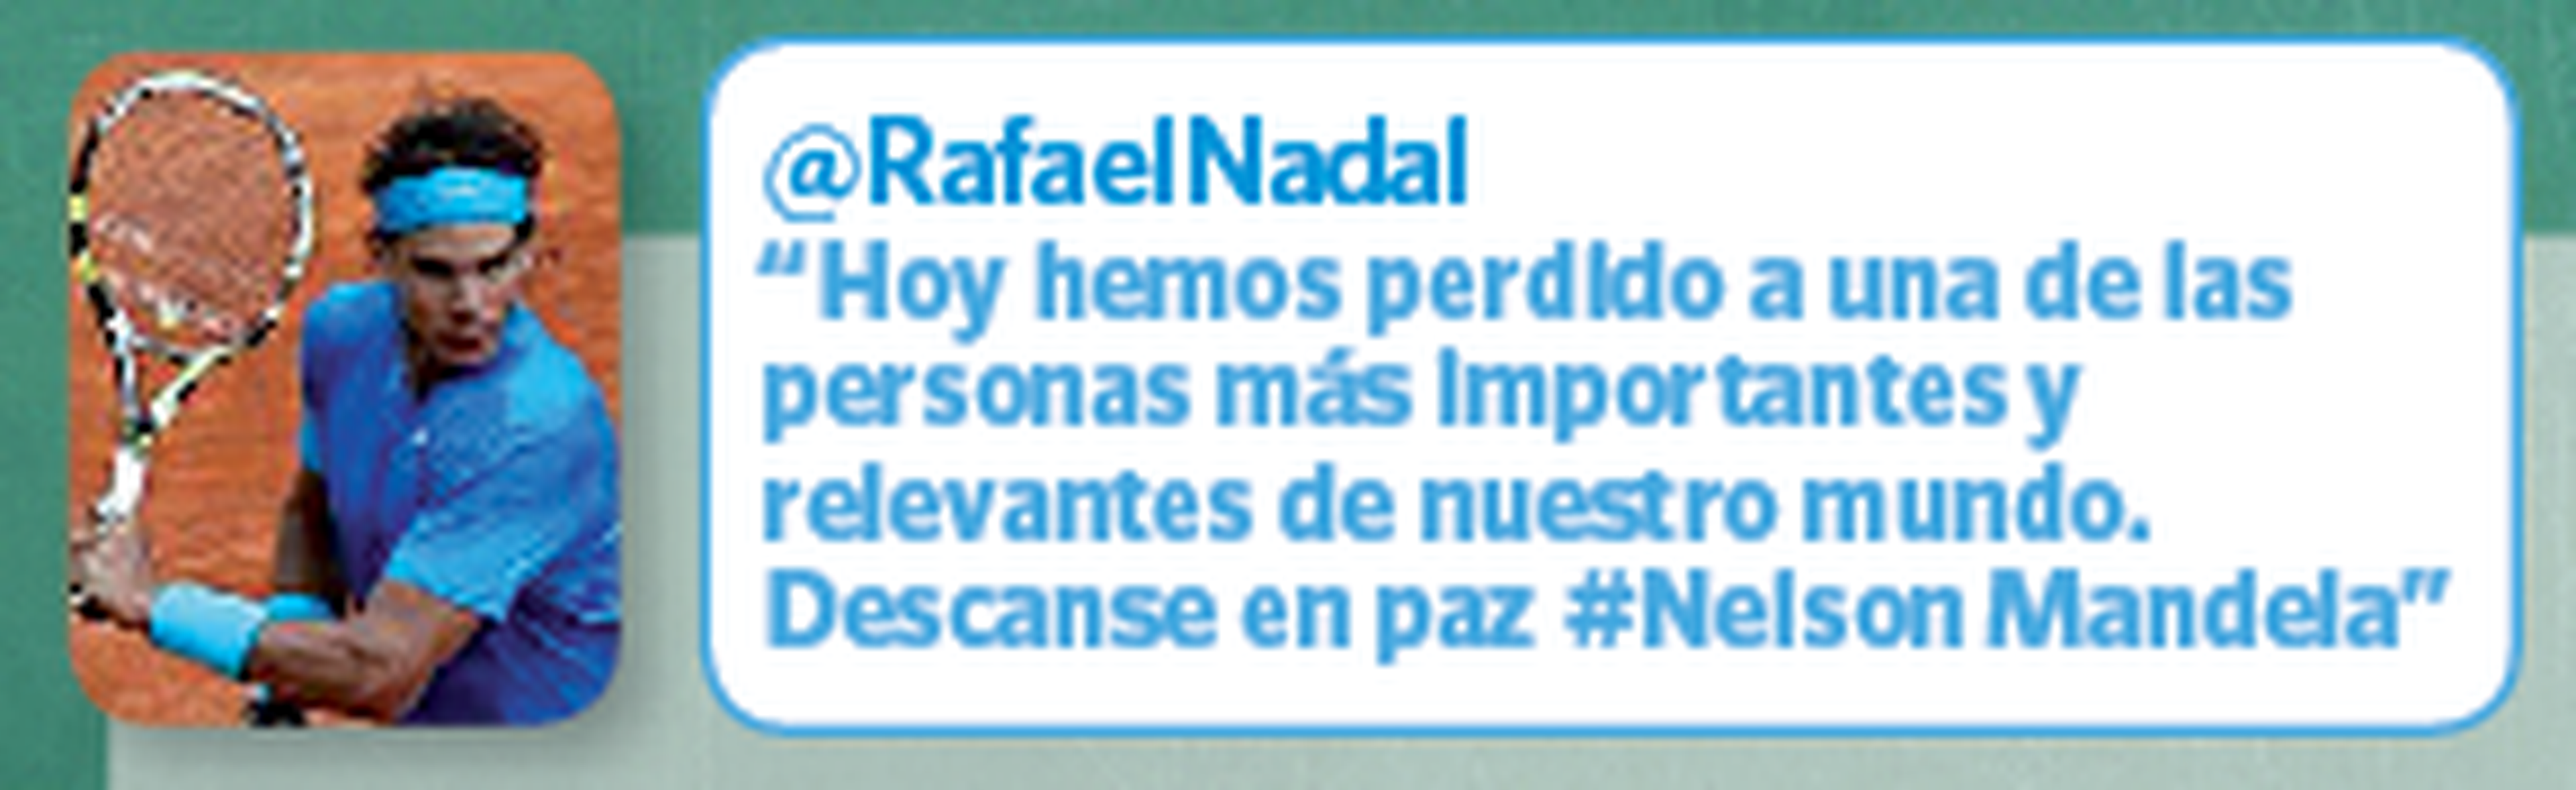 Twitter Rafa Nadal